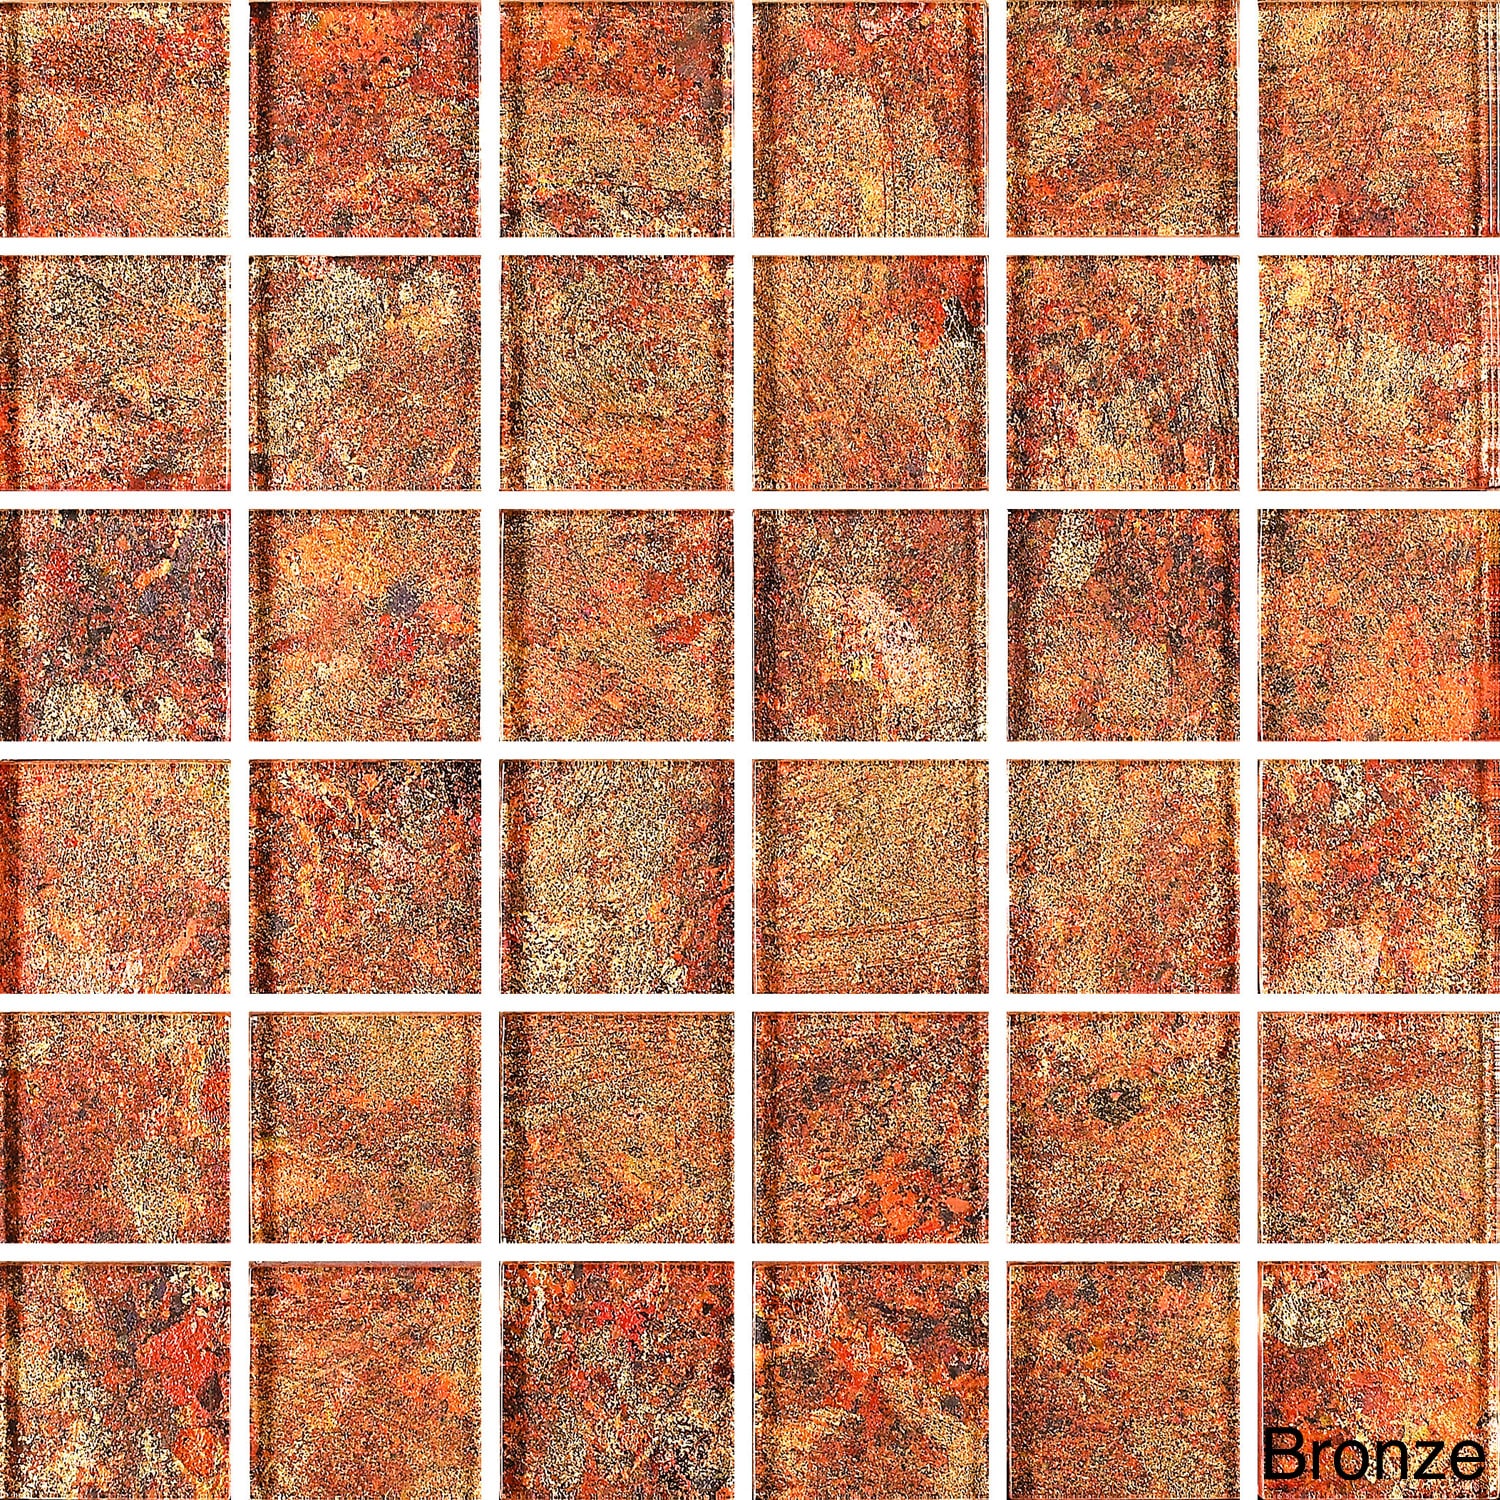 Emrytile Metallic 12x12 inch Sheet Wall Tiles (set Of 10)